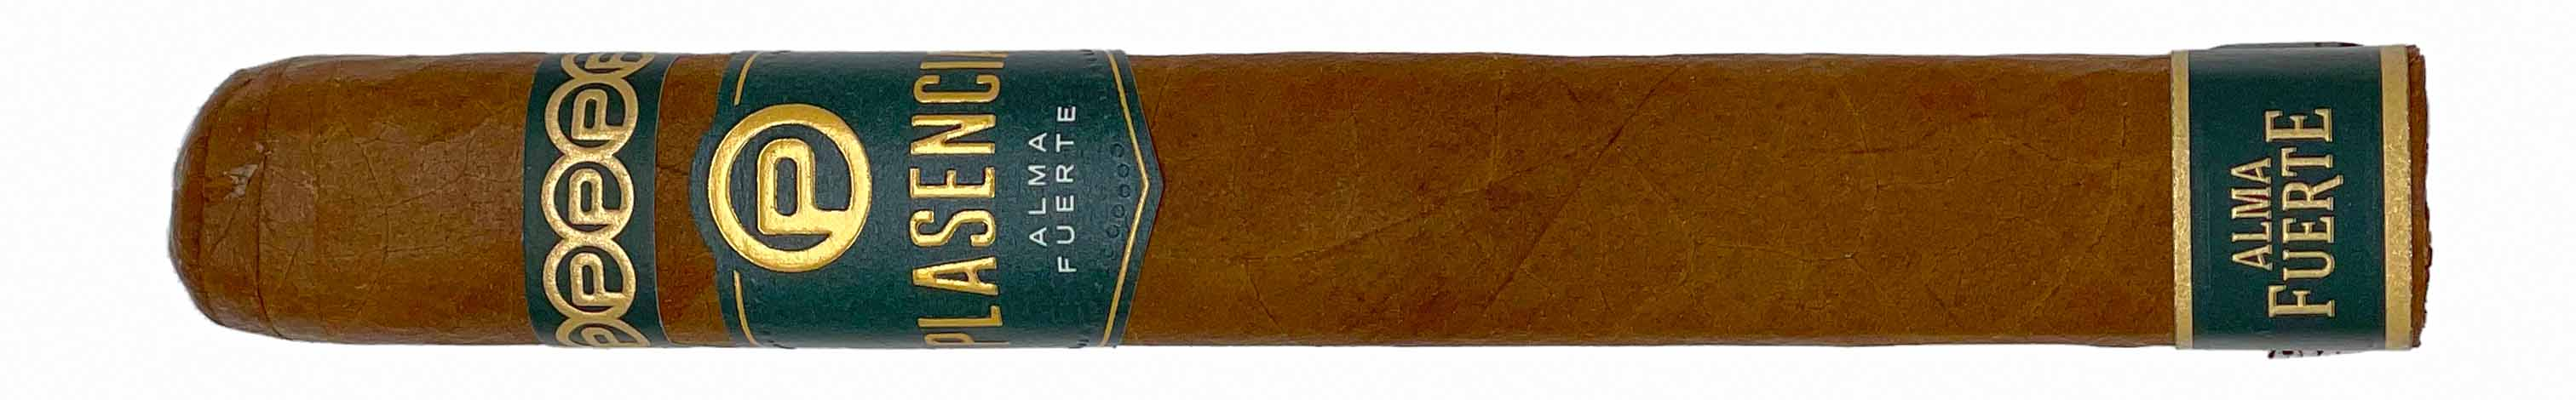 Plasencia Alma Fuerte Eduardo Colorado - Vast Selection of Plasencia Cigars